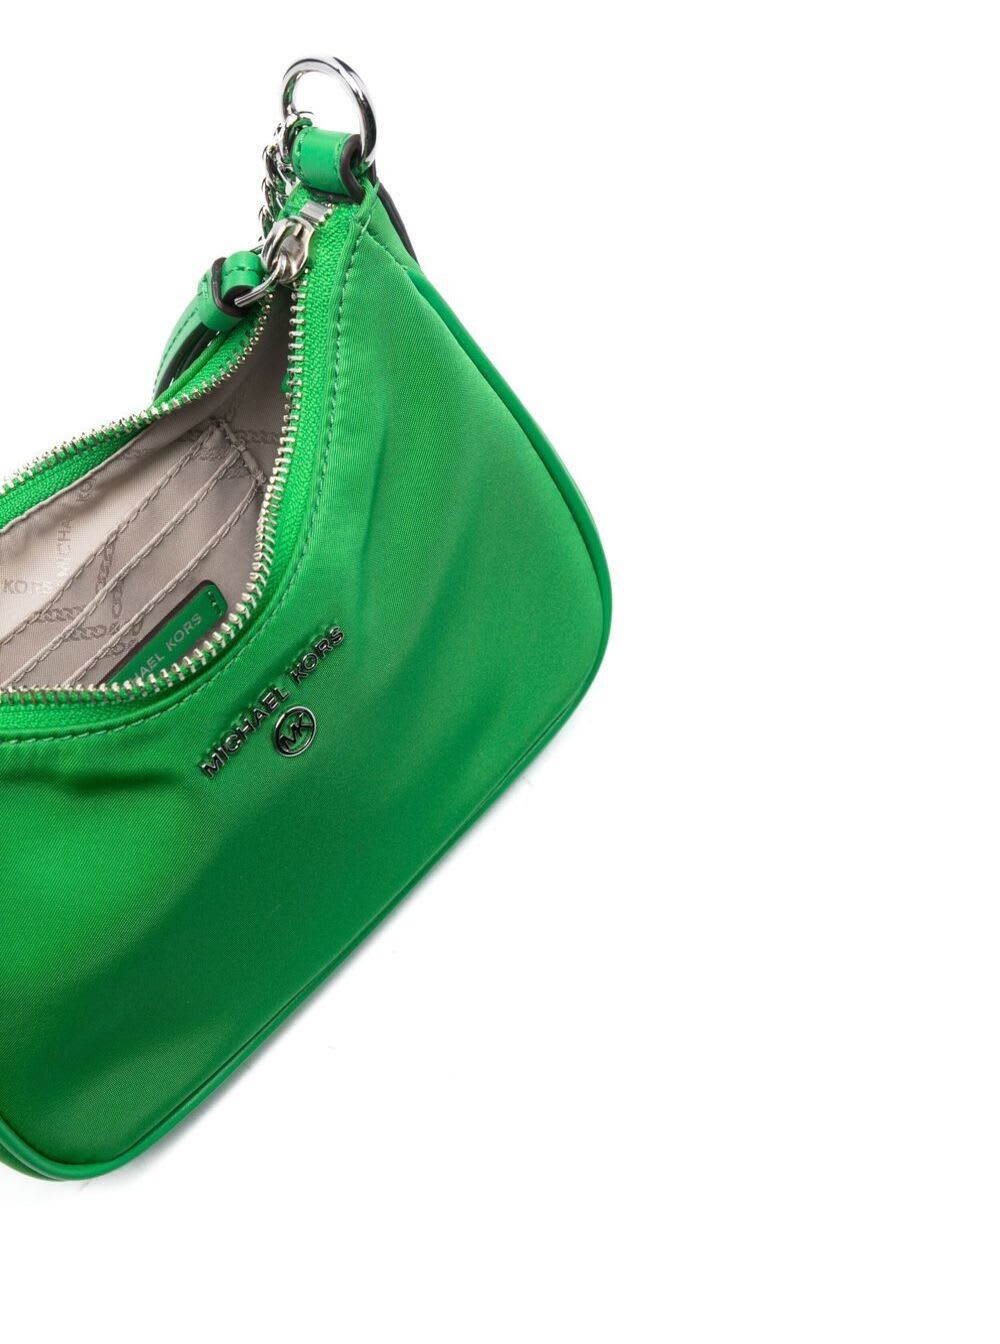 Michael Kors Jet Set Charm Sm Chain Pouchette - Handbags 